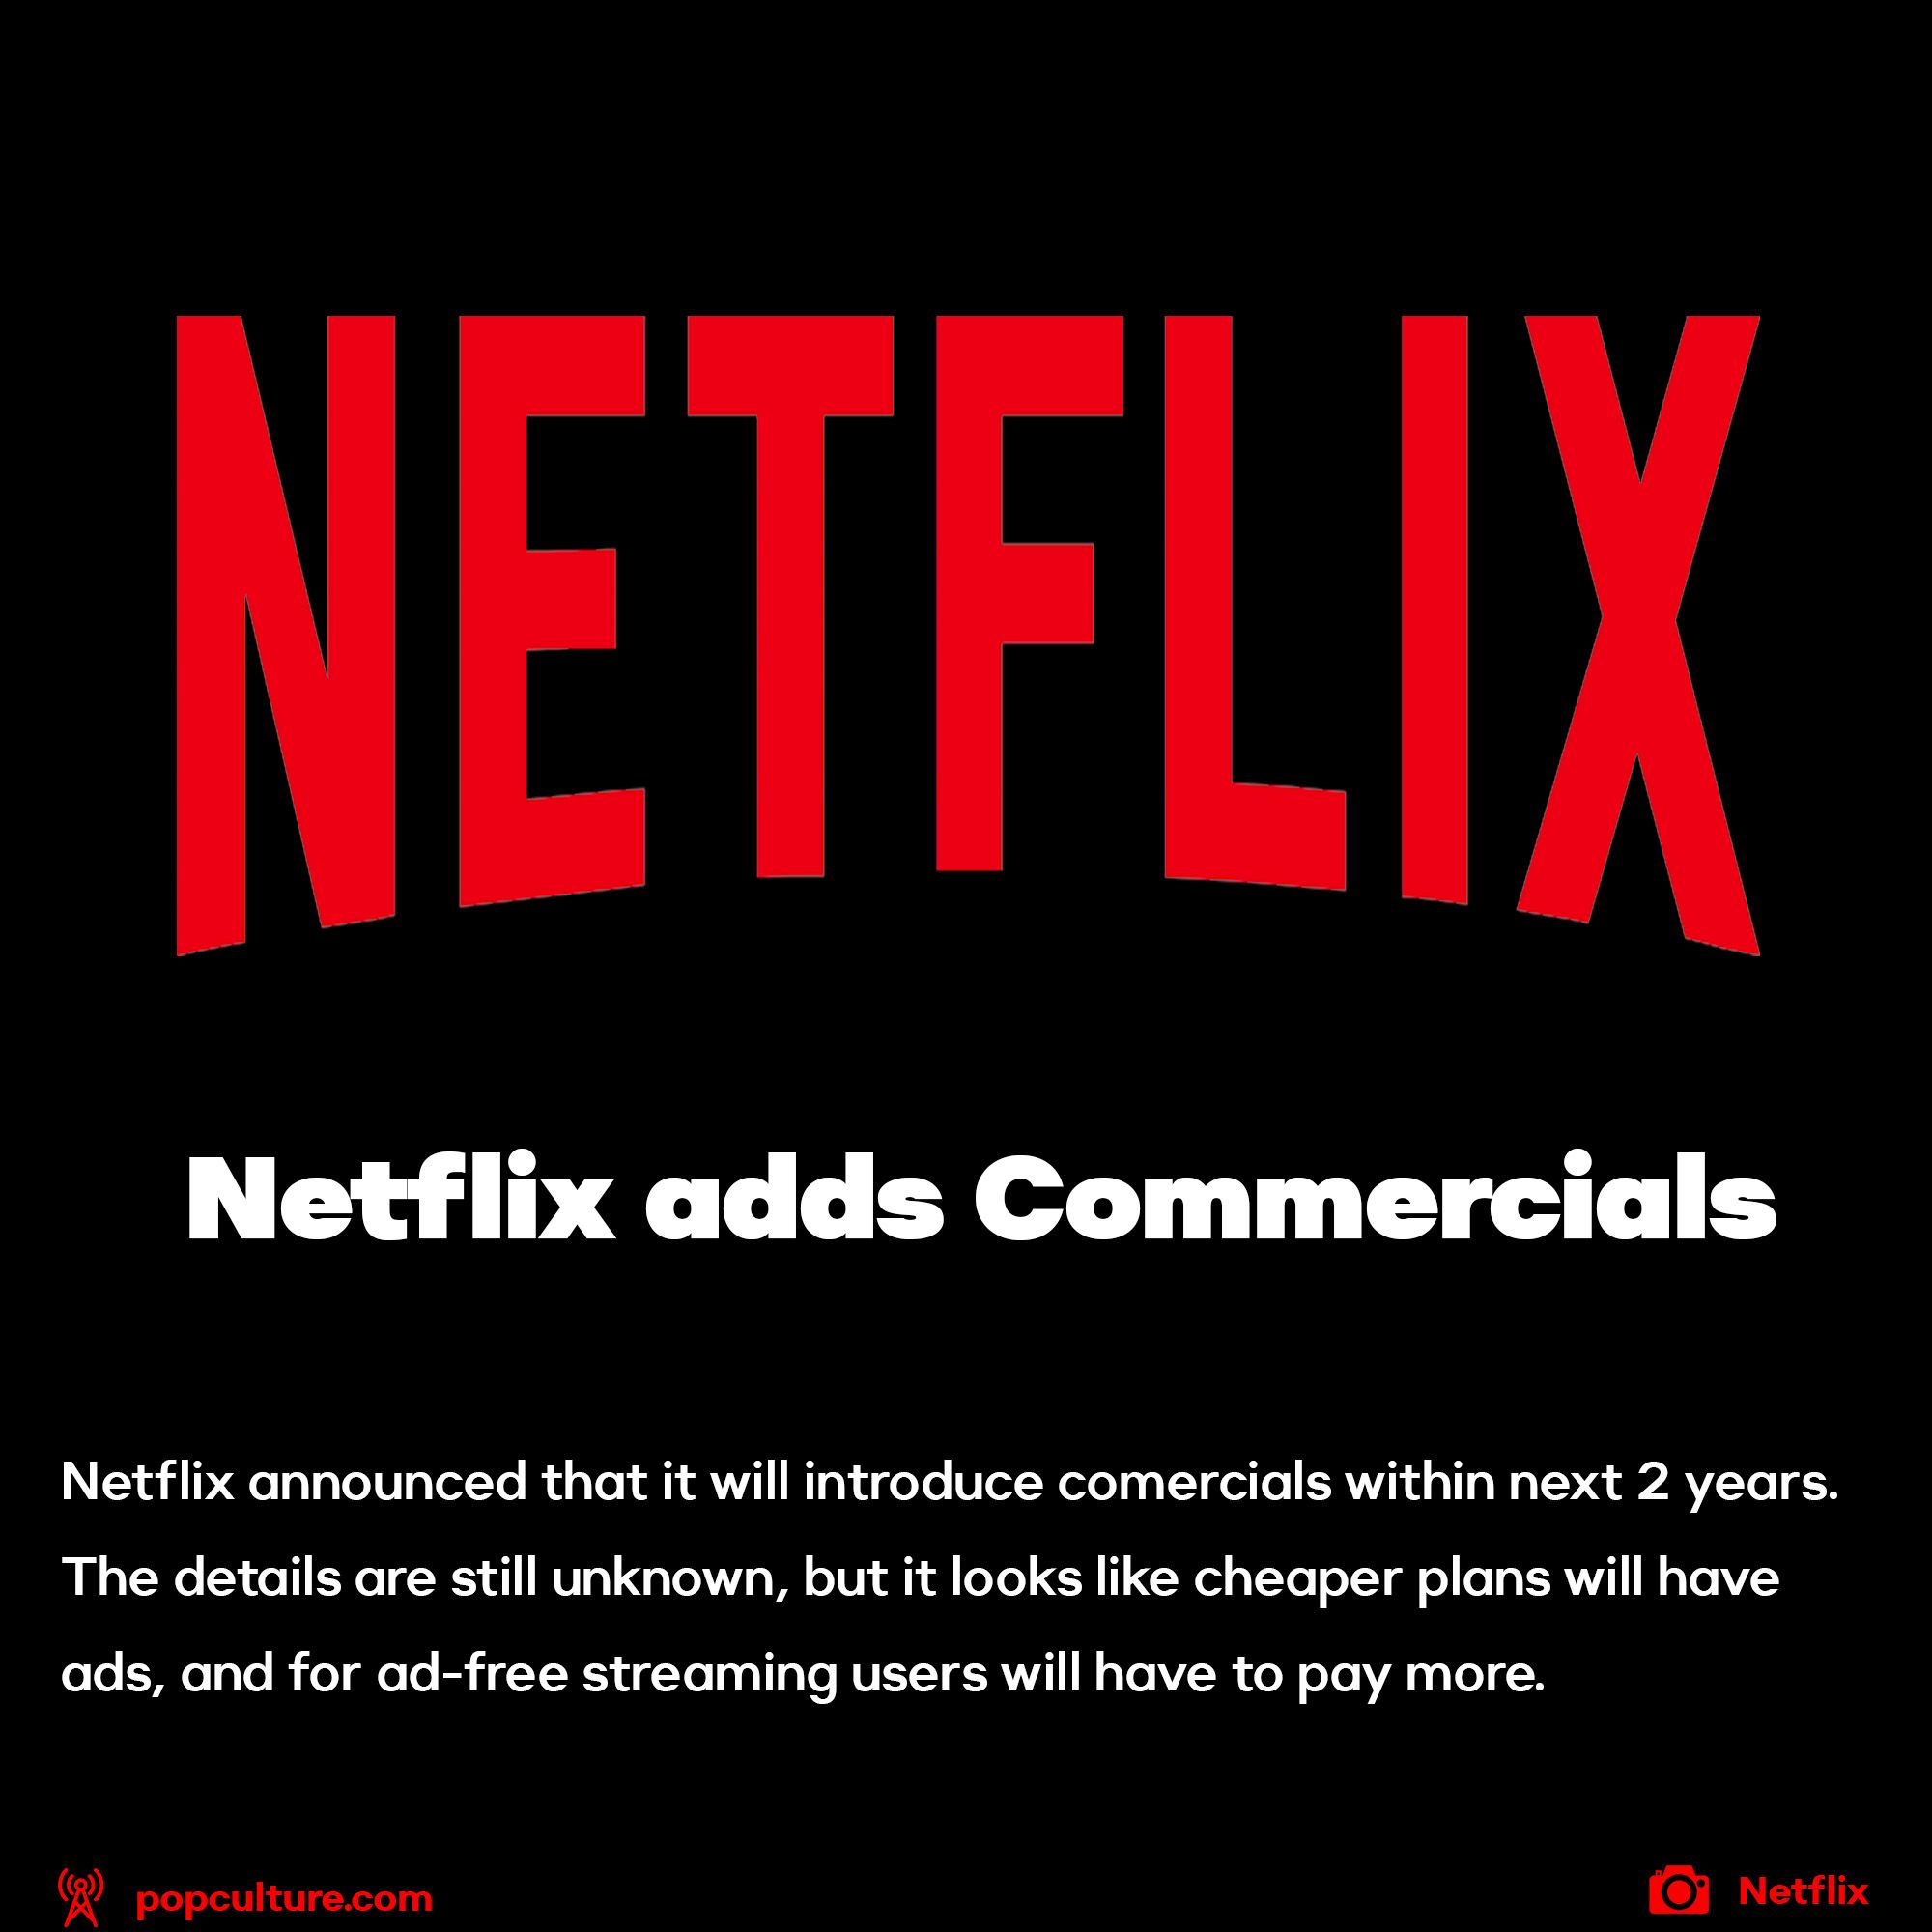 Netflix will introduce ads